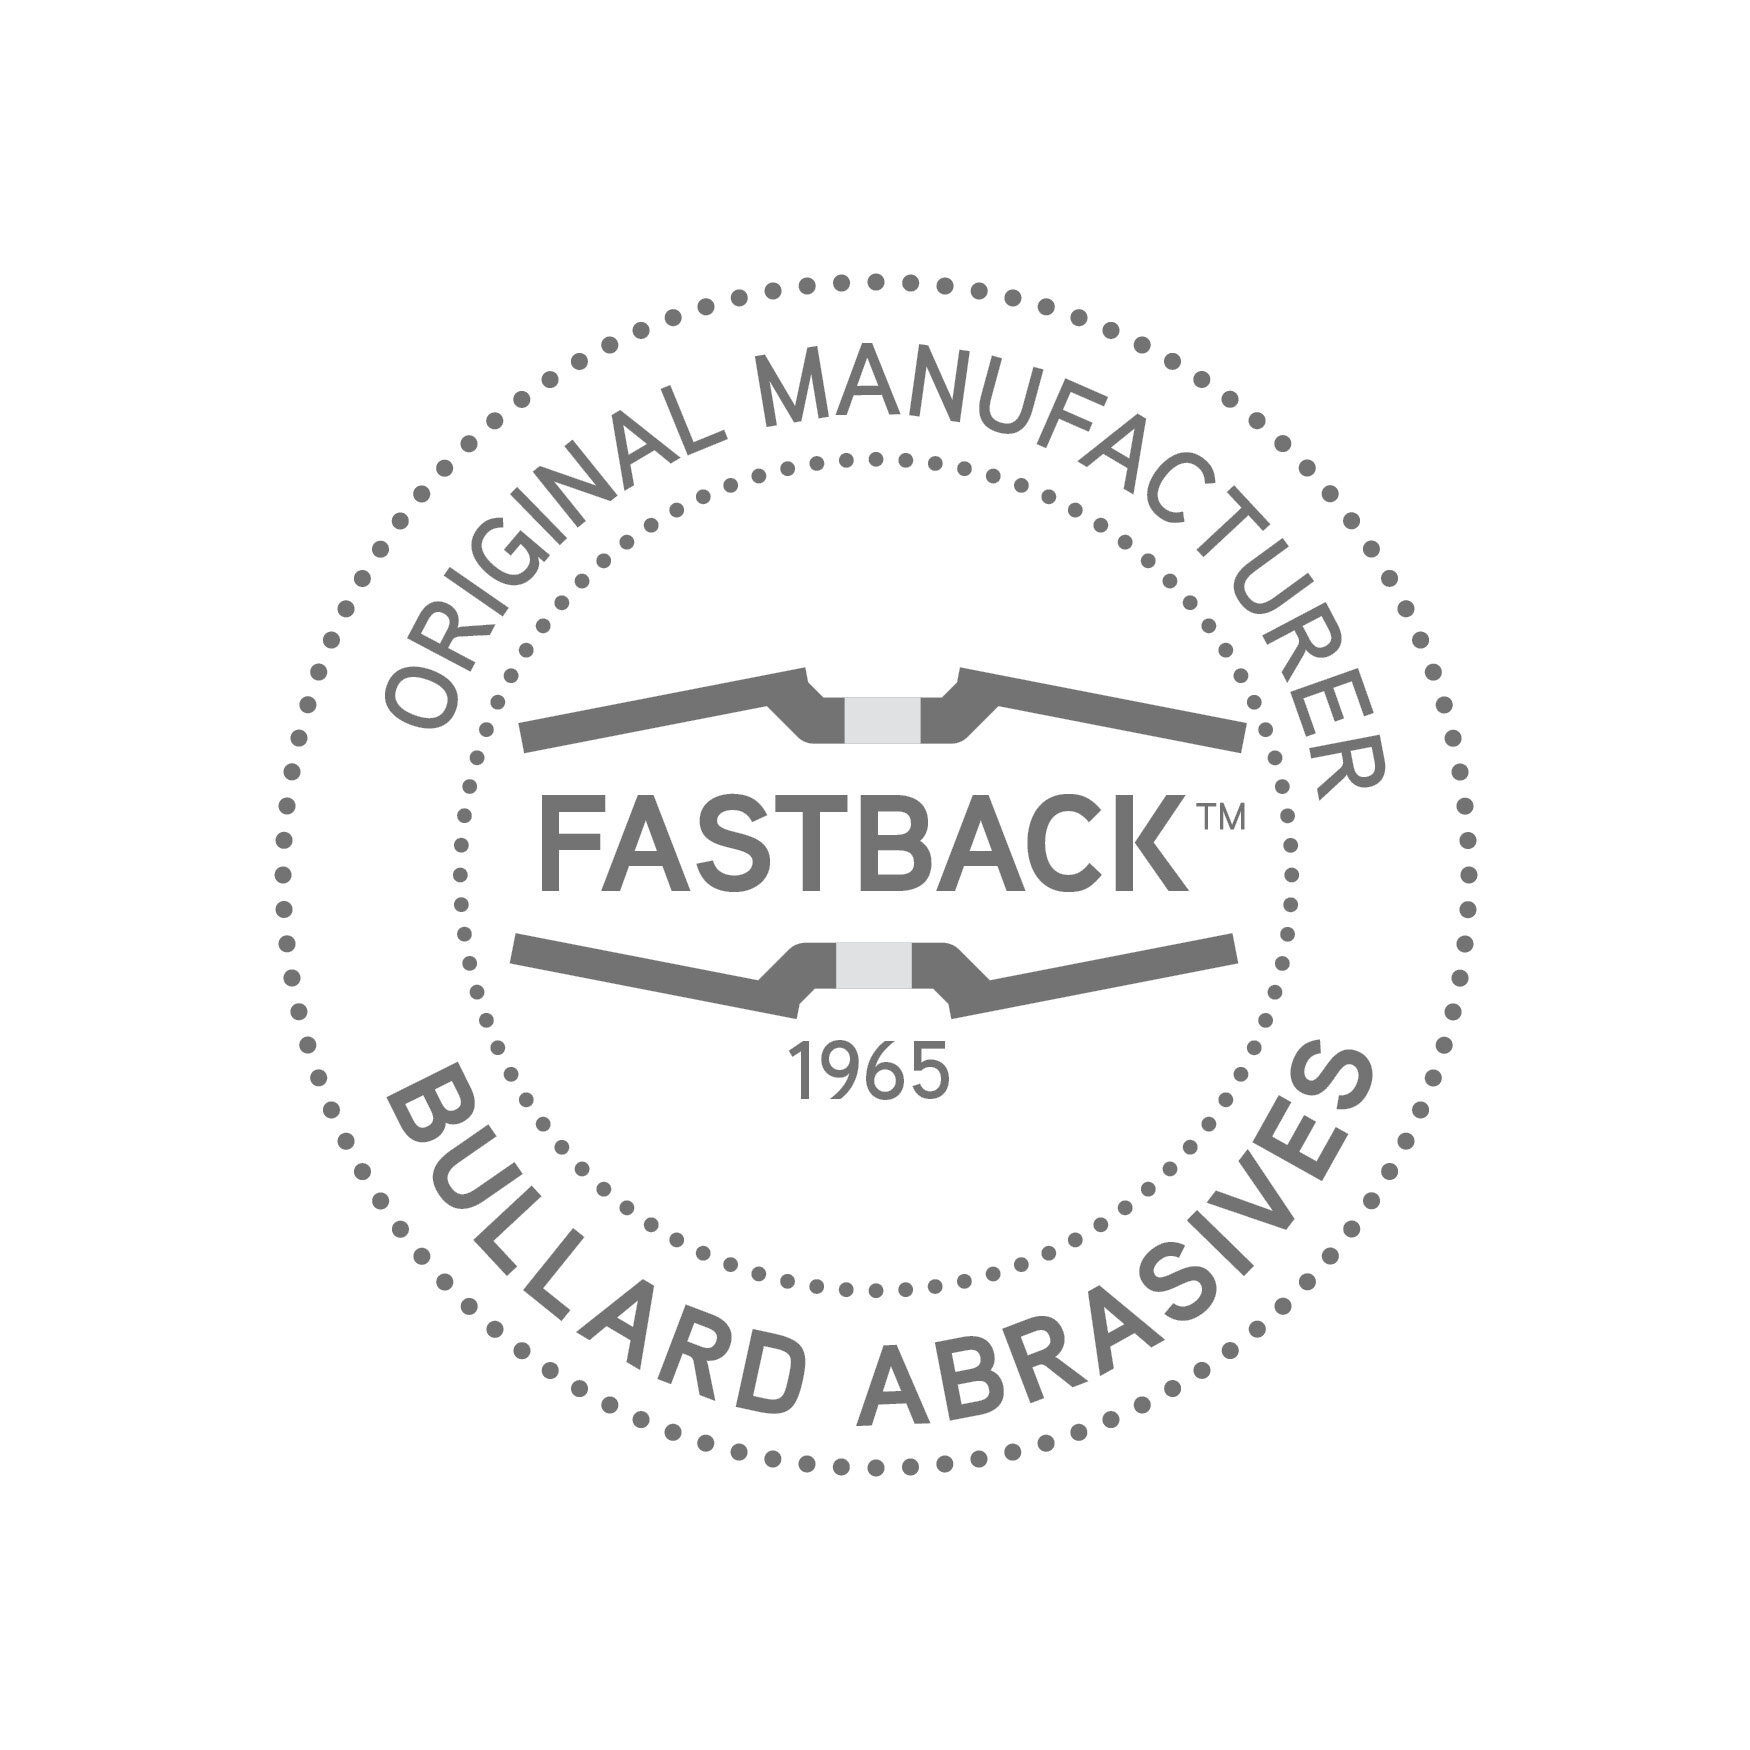 Fastback_Stamp_RapidGrind_2020.jpg